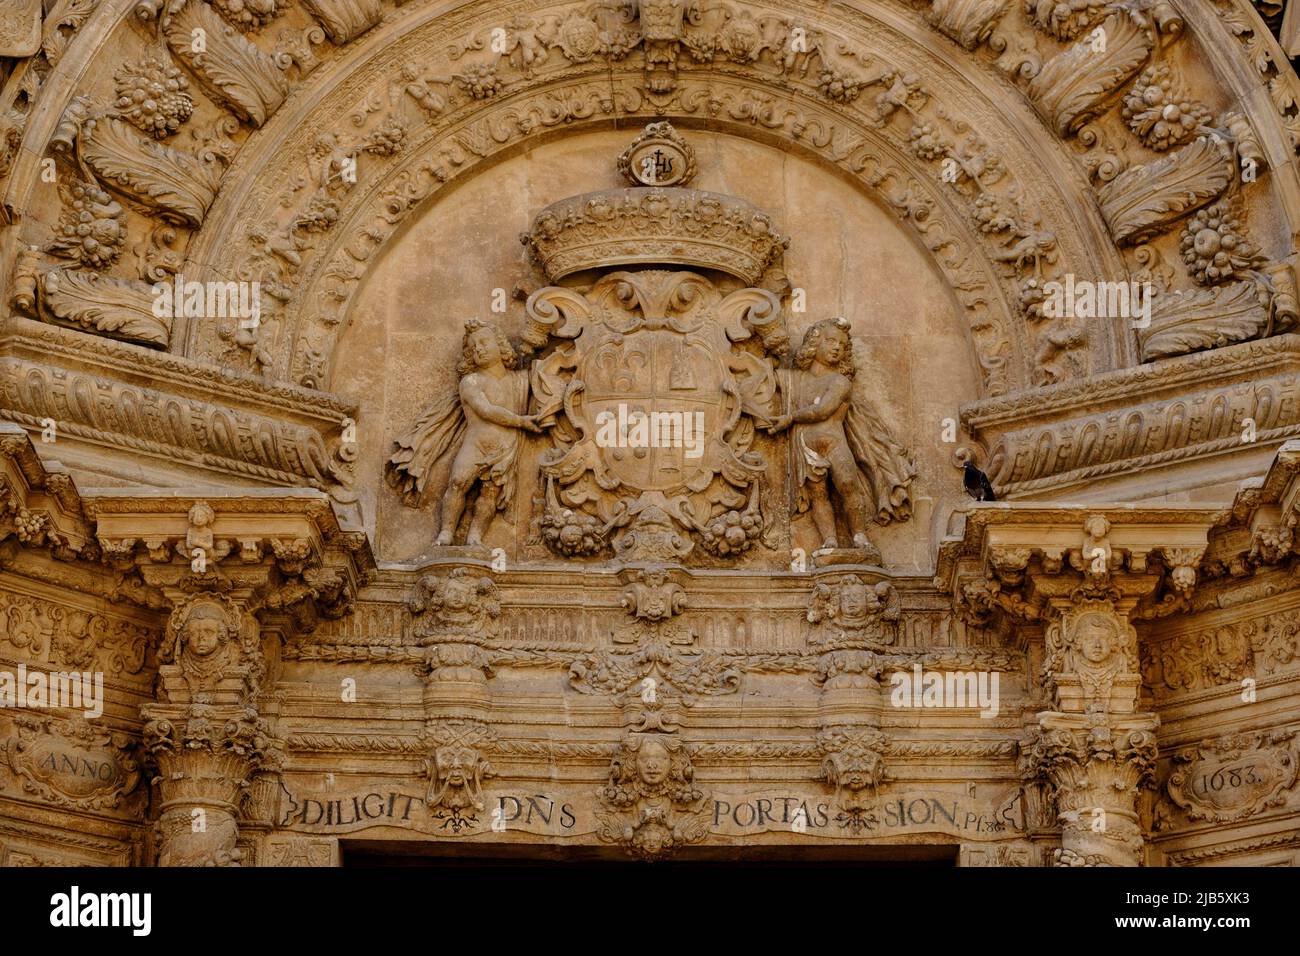 Shield of the sponsor of the works, Ramon de Verí, Monti-sion church portal, Jesuit convent, Palma, Mallorca, Balearic Islands, Spain, Europe. Stock Photo